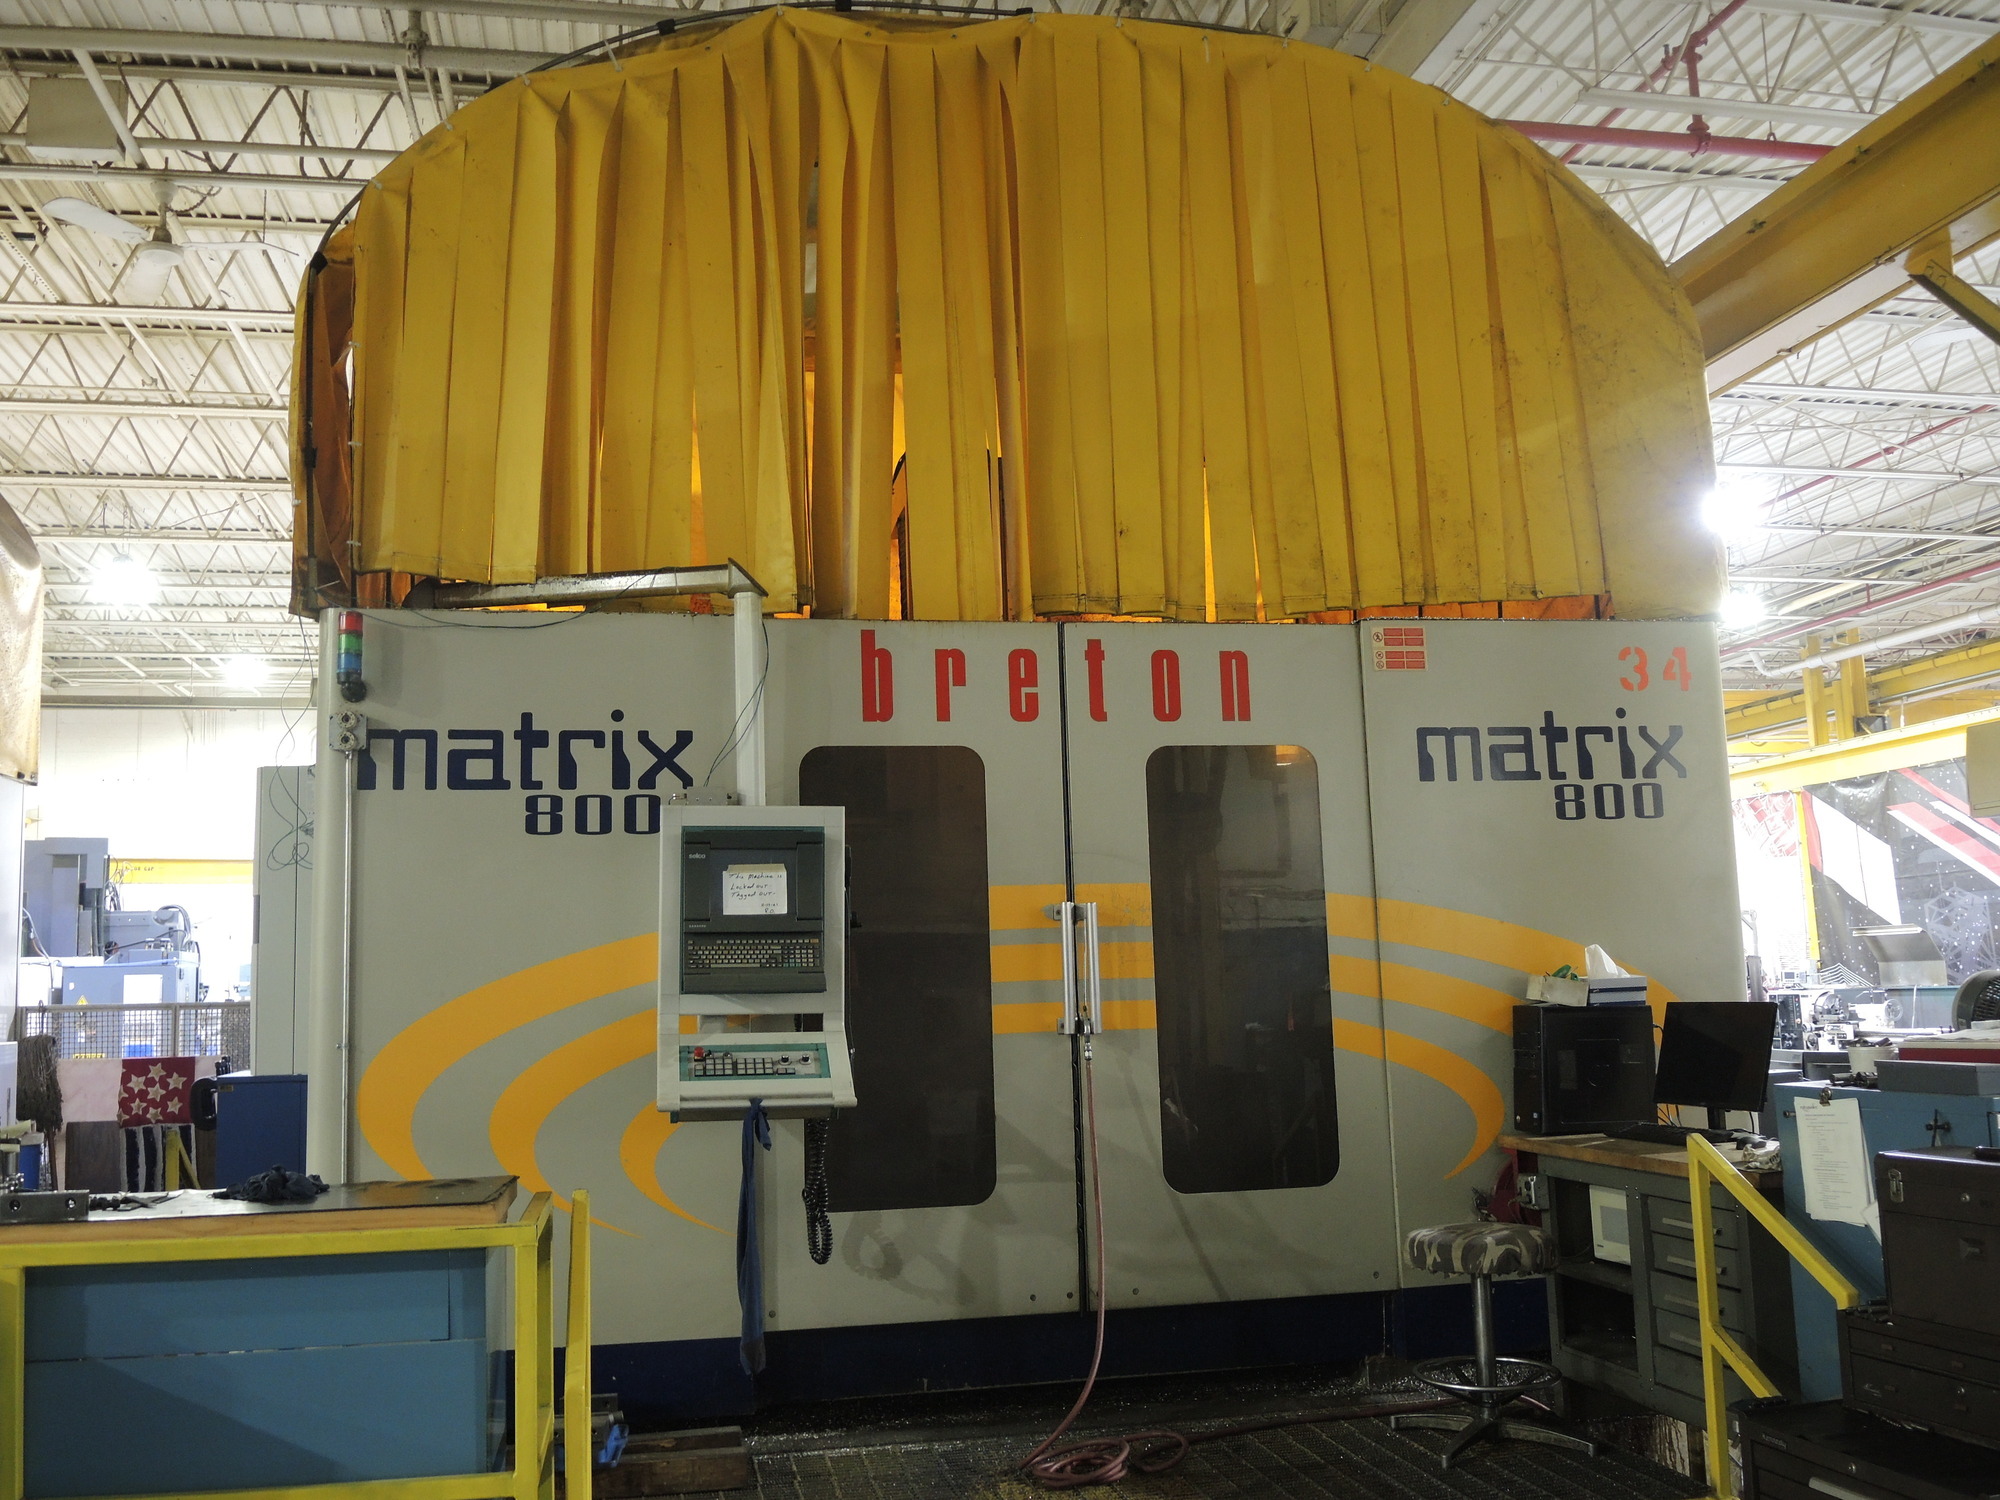 BRETON MATRIX 800 K/25 Vertical Machining Centers (5-Axis or More) | Tartan American Machinery Corp.